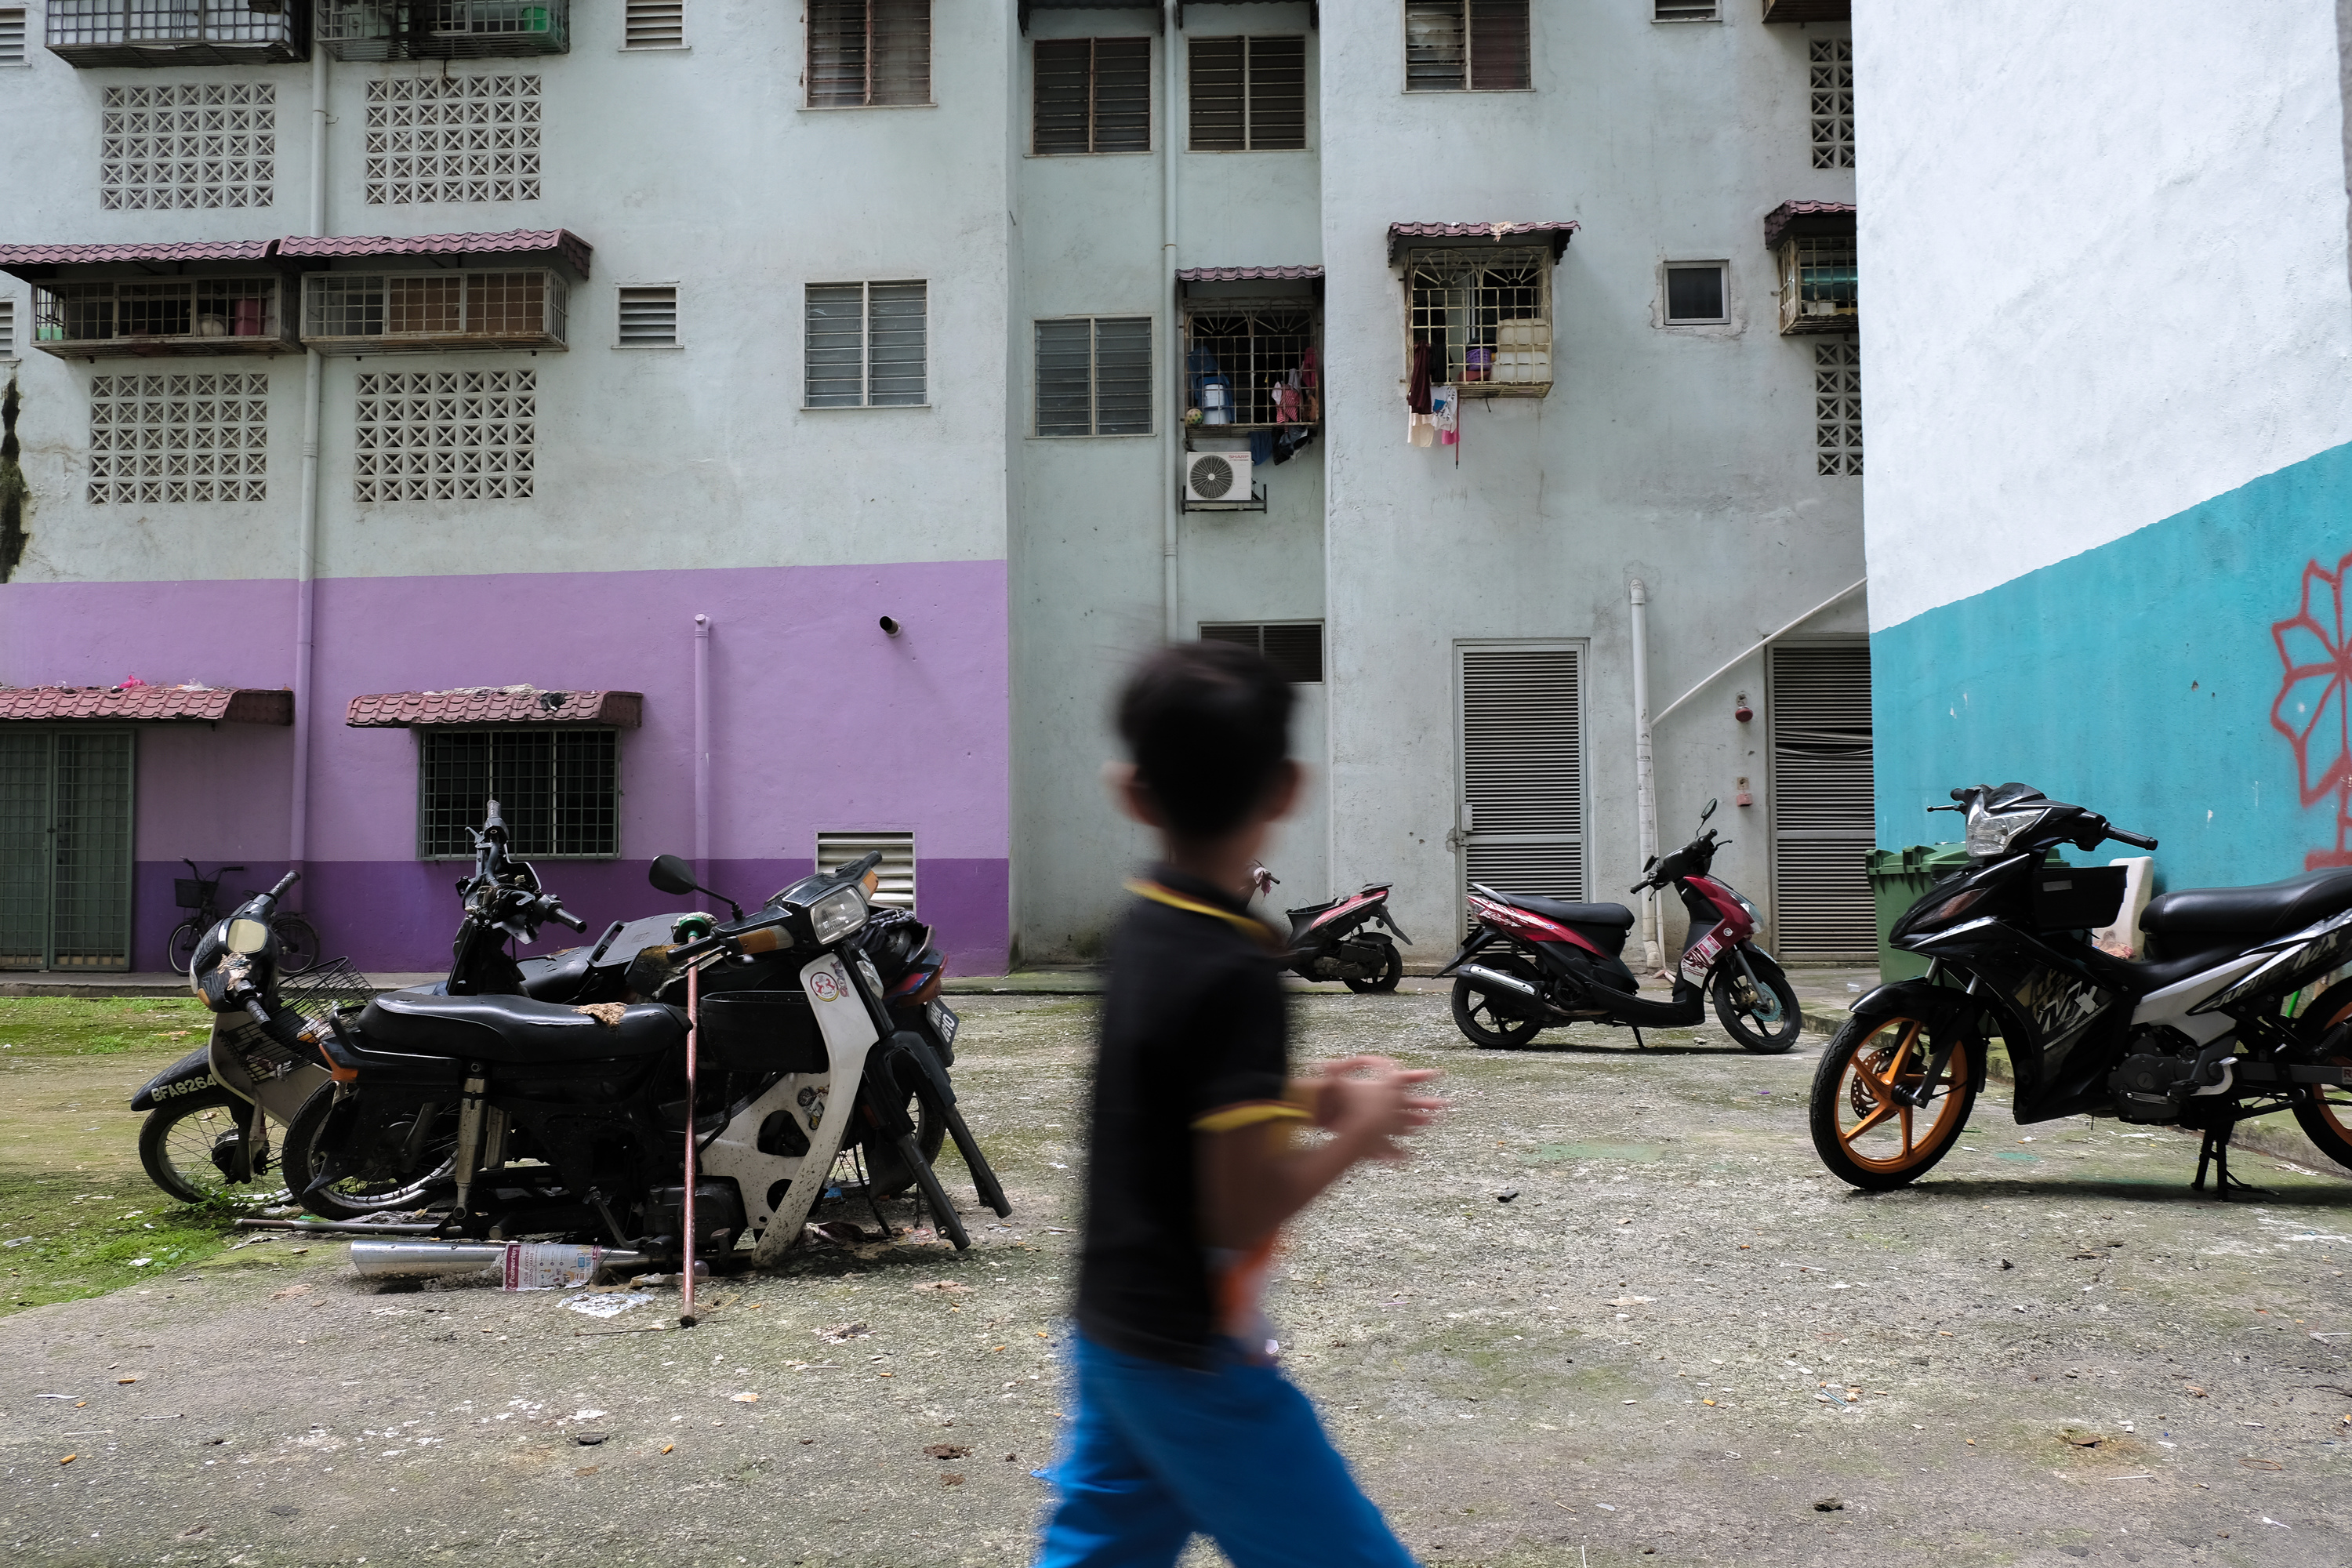 Public housing flats in Malaysia. Photo: Farhan Iqbal